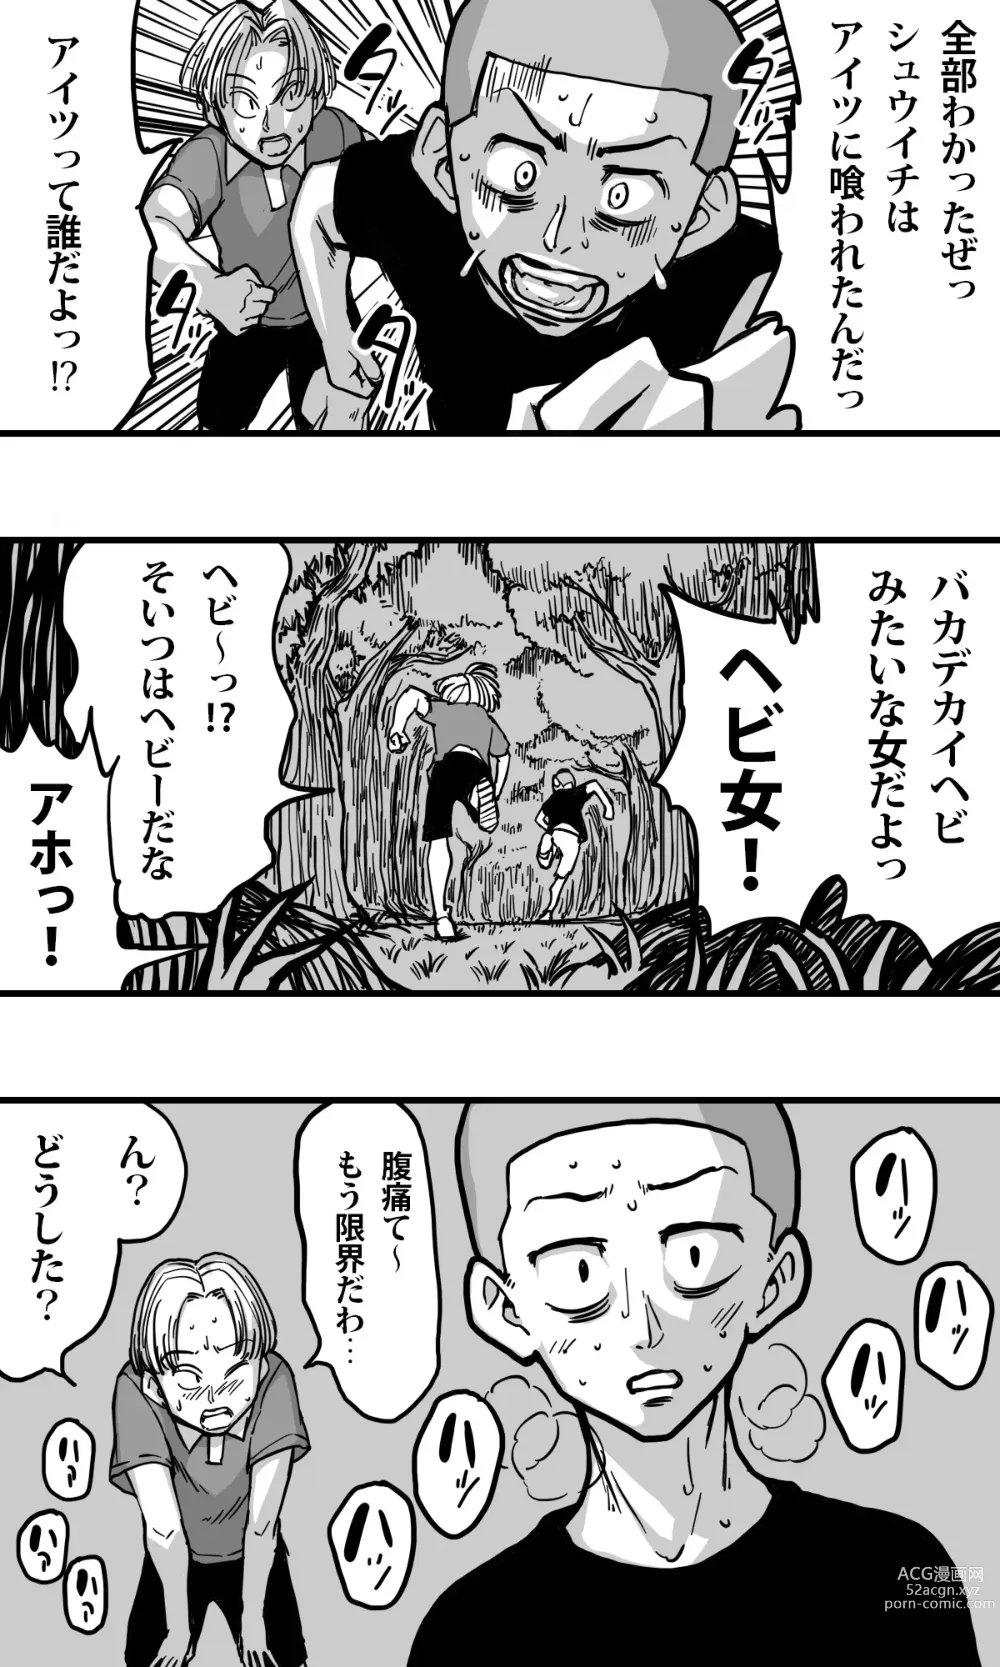 Page 9 of doujinshi POLMANGA_09